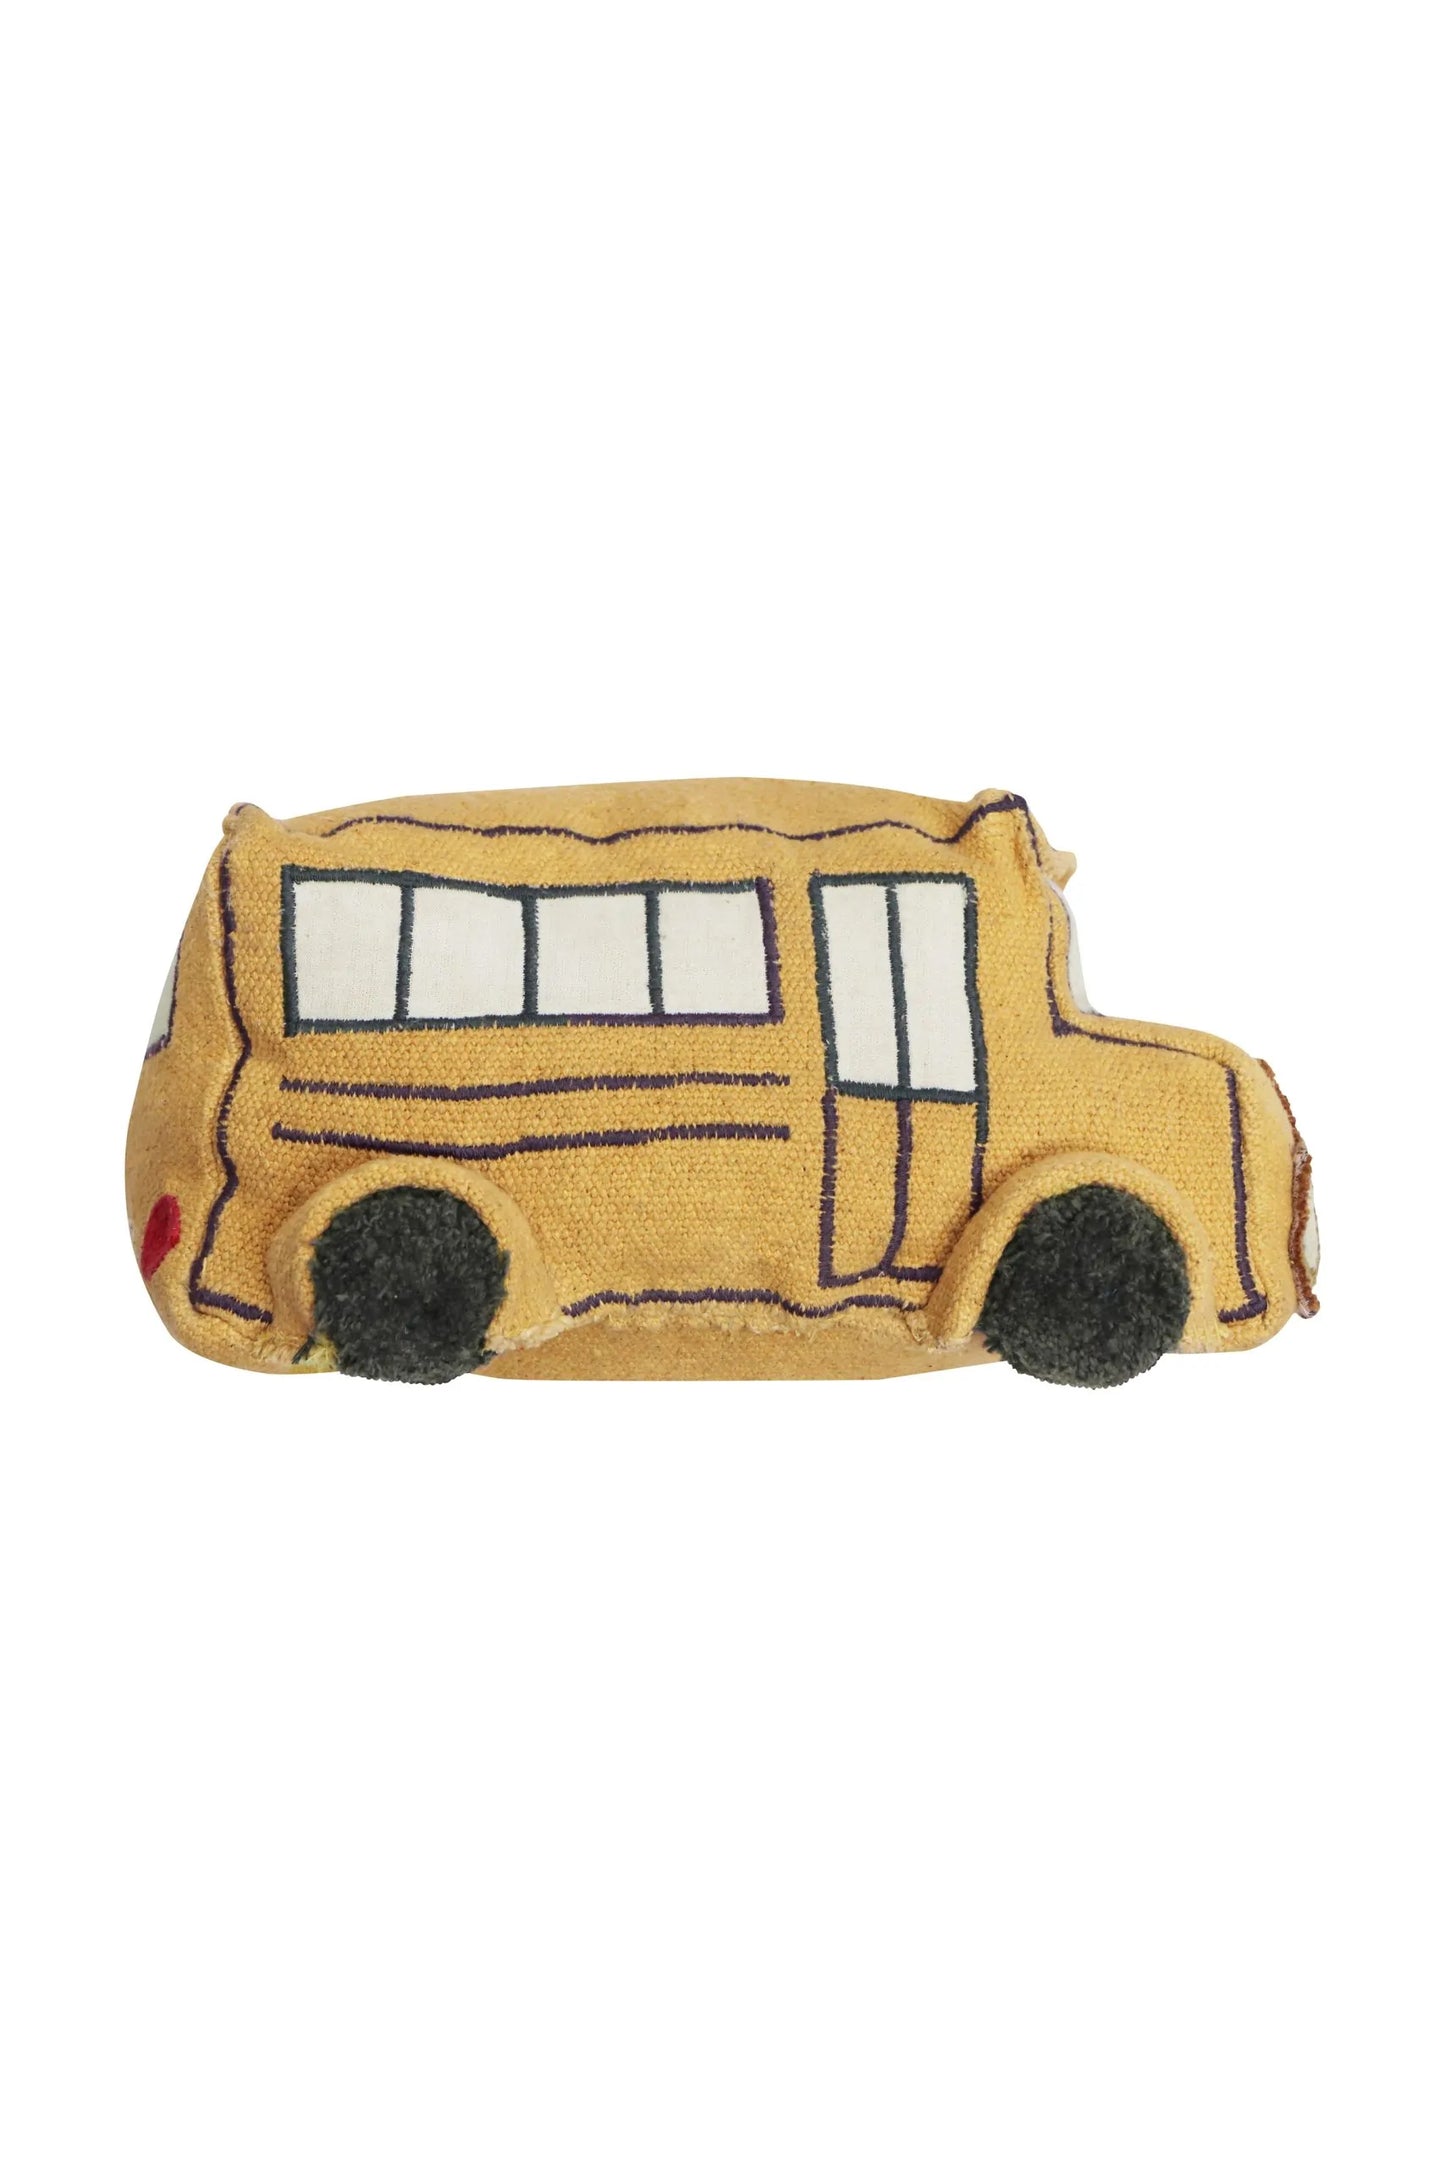 Ride & Roll - School bus